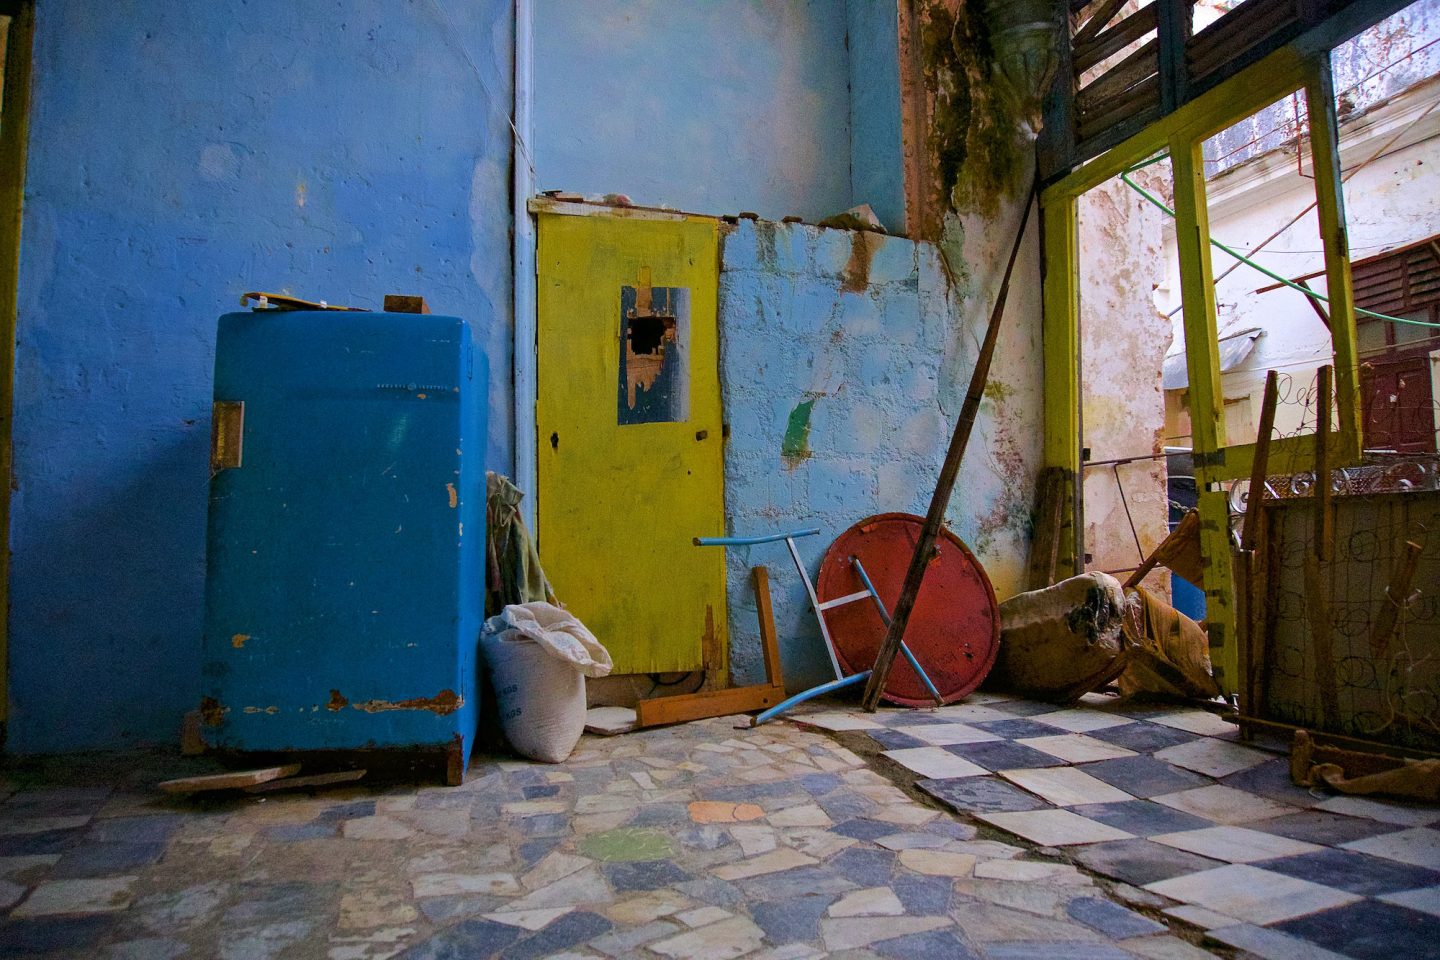 Abandoned fridge in Havana. Daily life in Cuba.